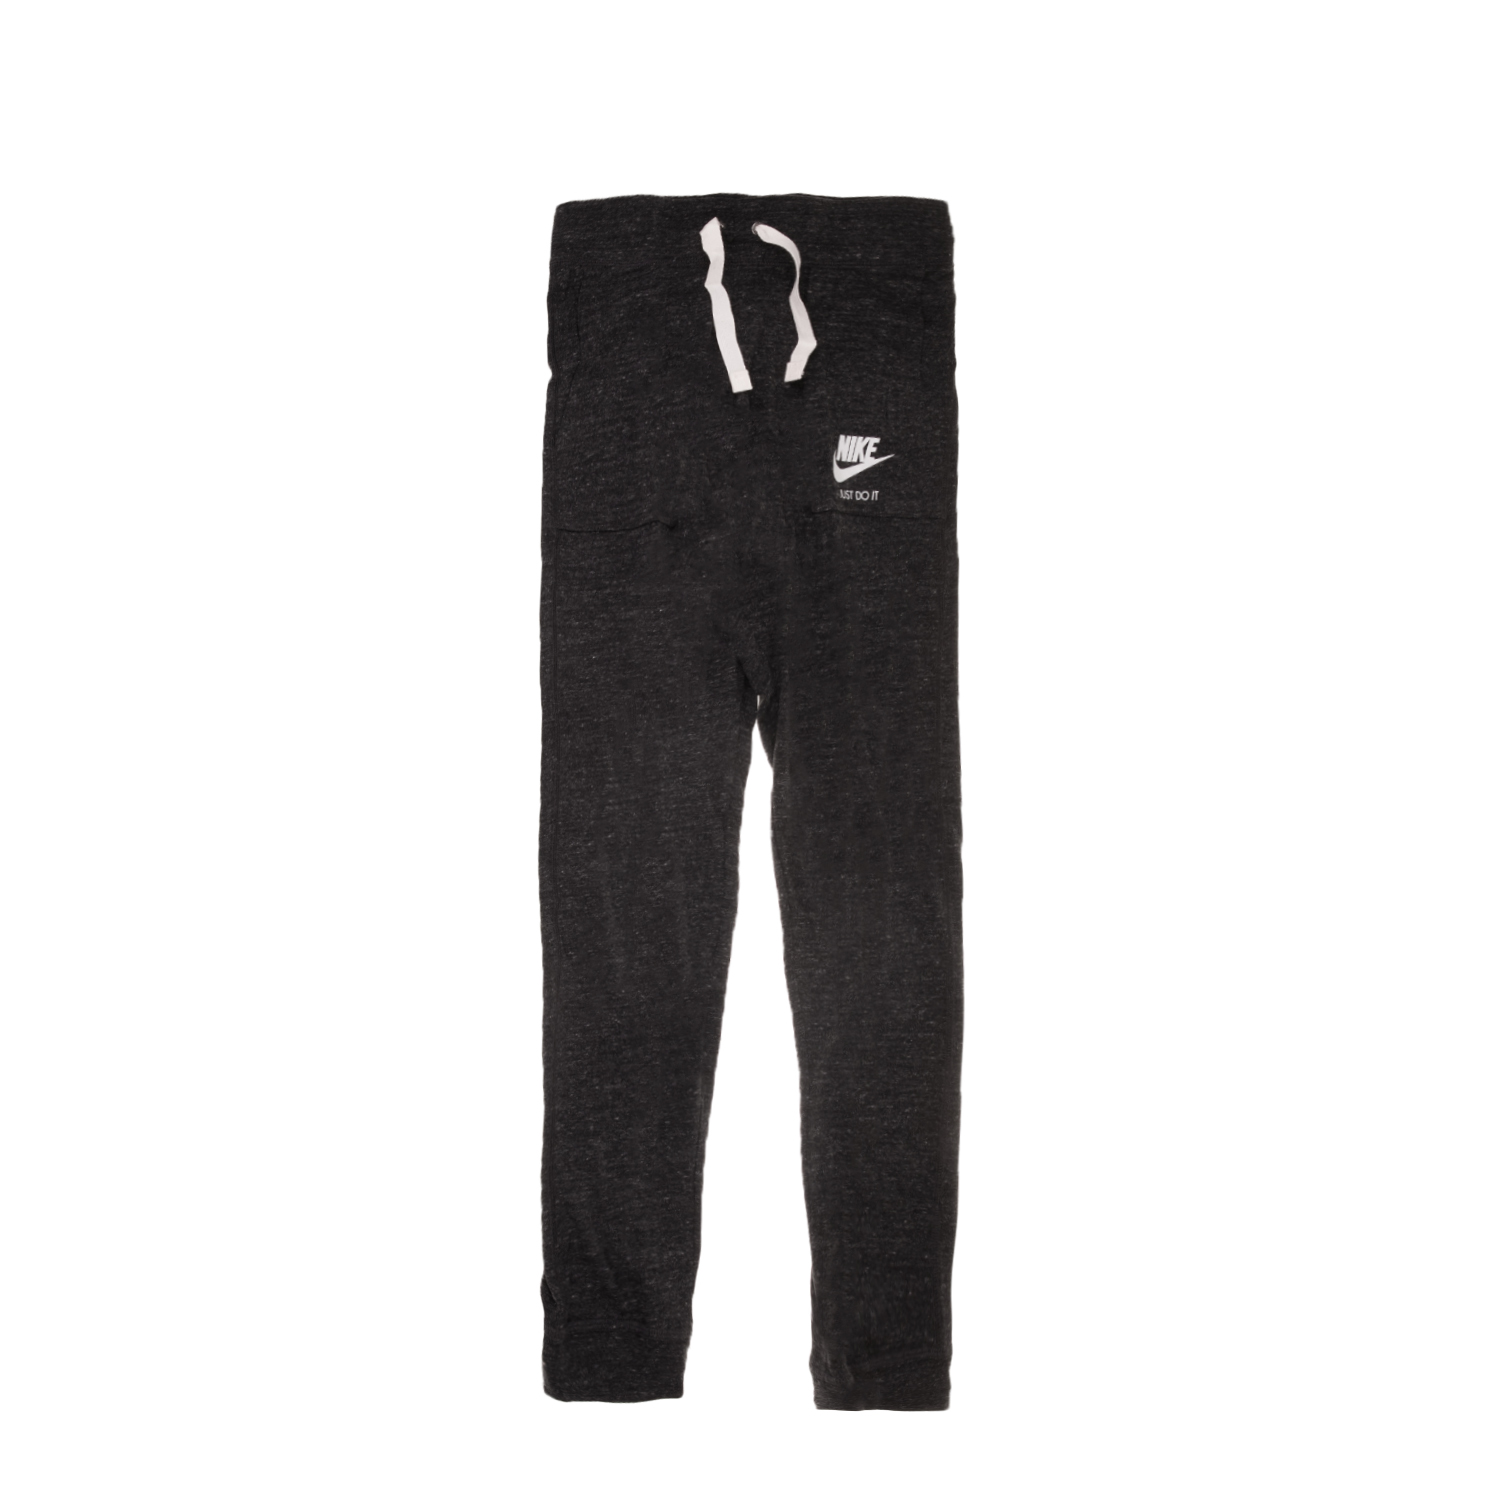 NIKE - Κοριτσίστικο παντελόνι φόρμας G NSW VNTG PANT μαύρο Παιδικά/Girls/Ρούχα/Αθλητικά